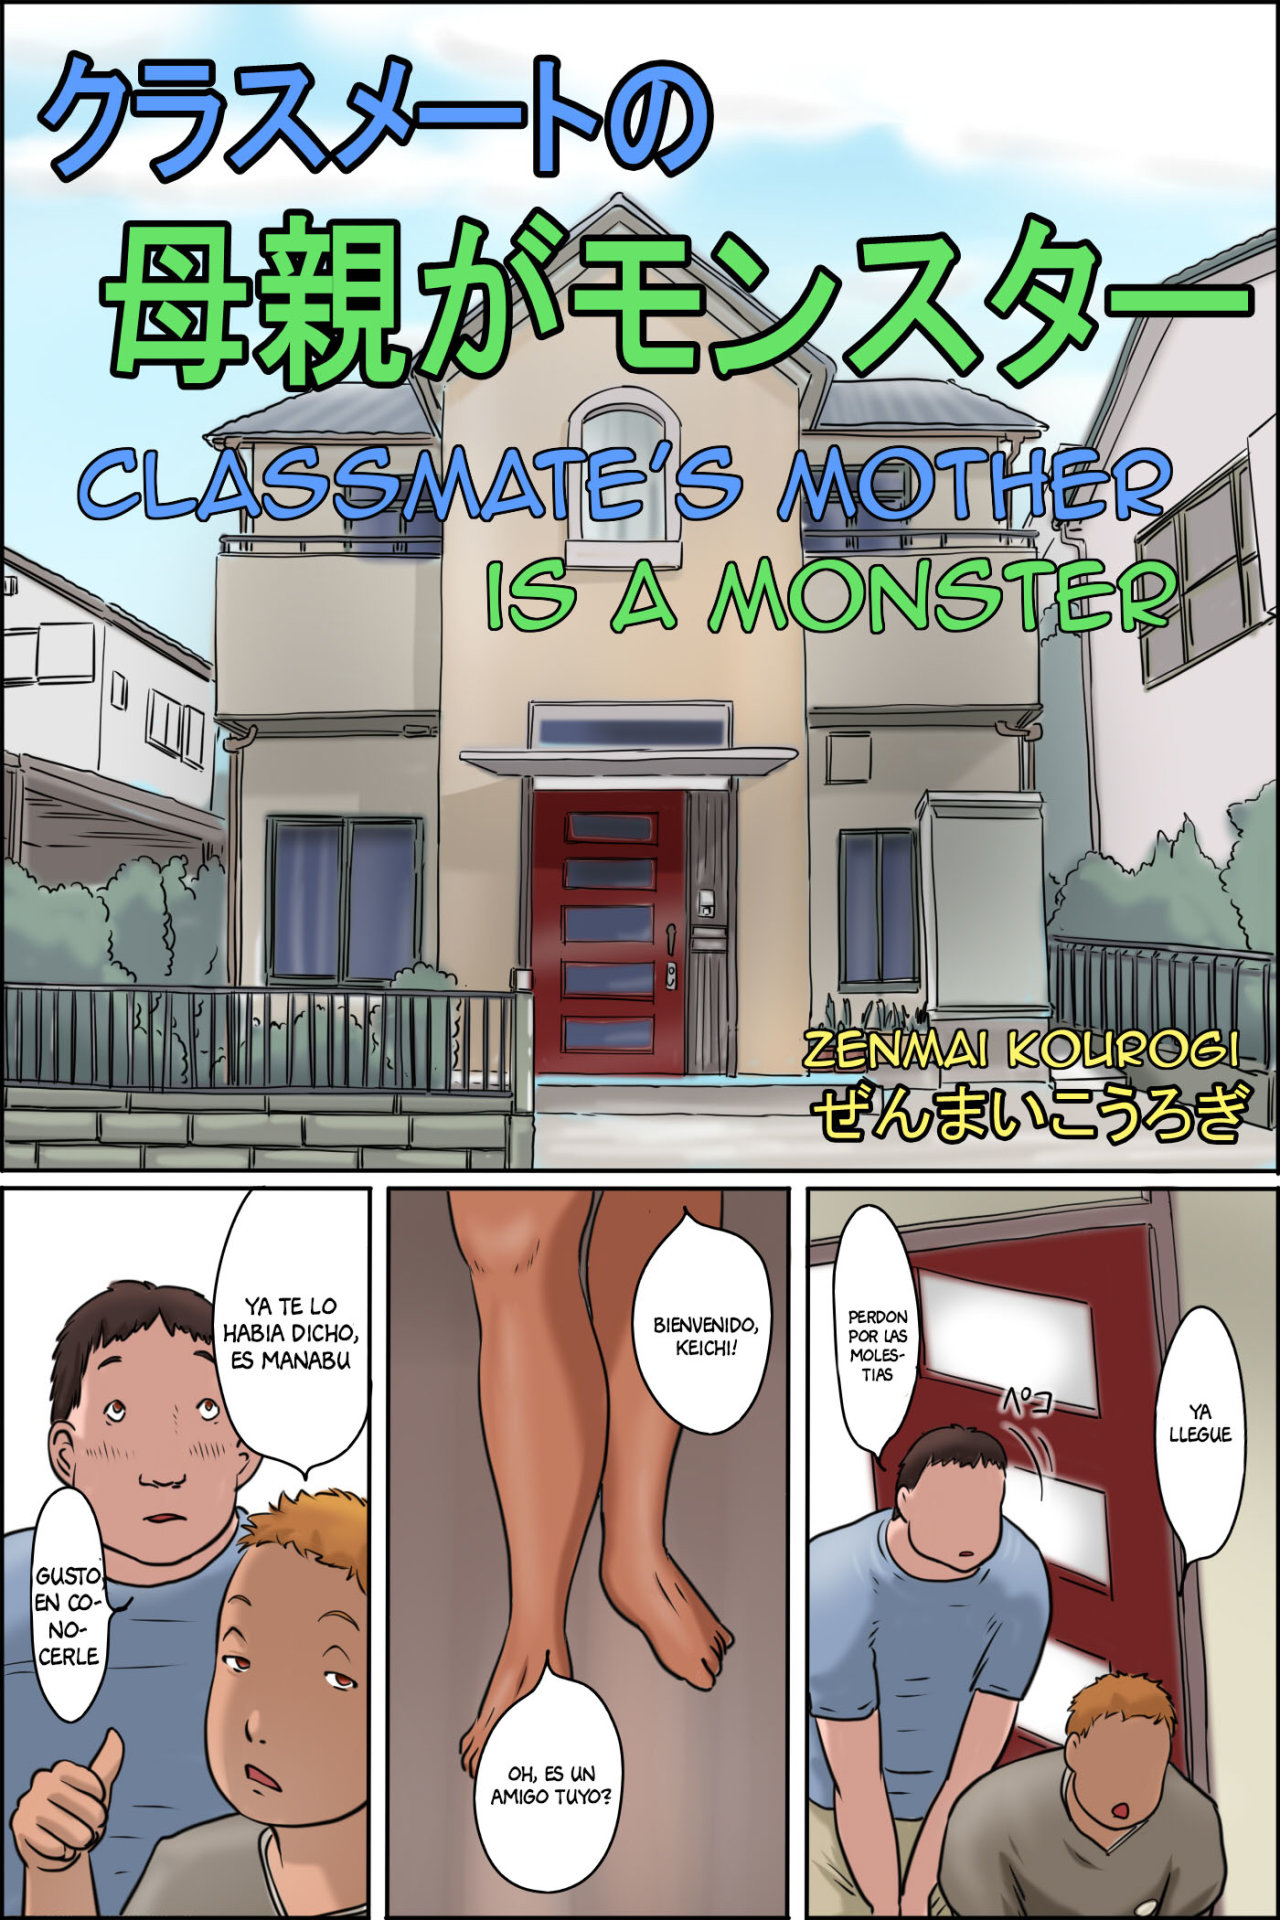 Classmate no Hahaoya ga Monster_Classmates Mother is a Monster - 0